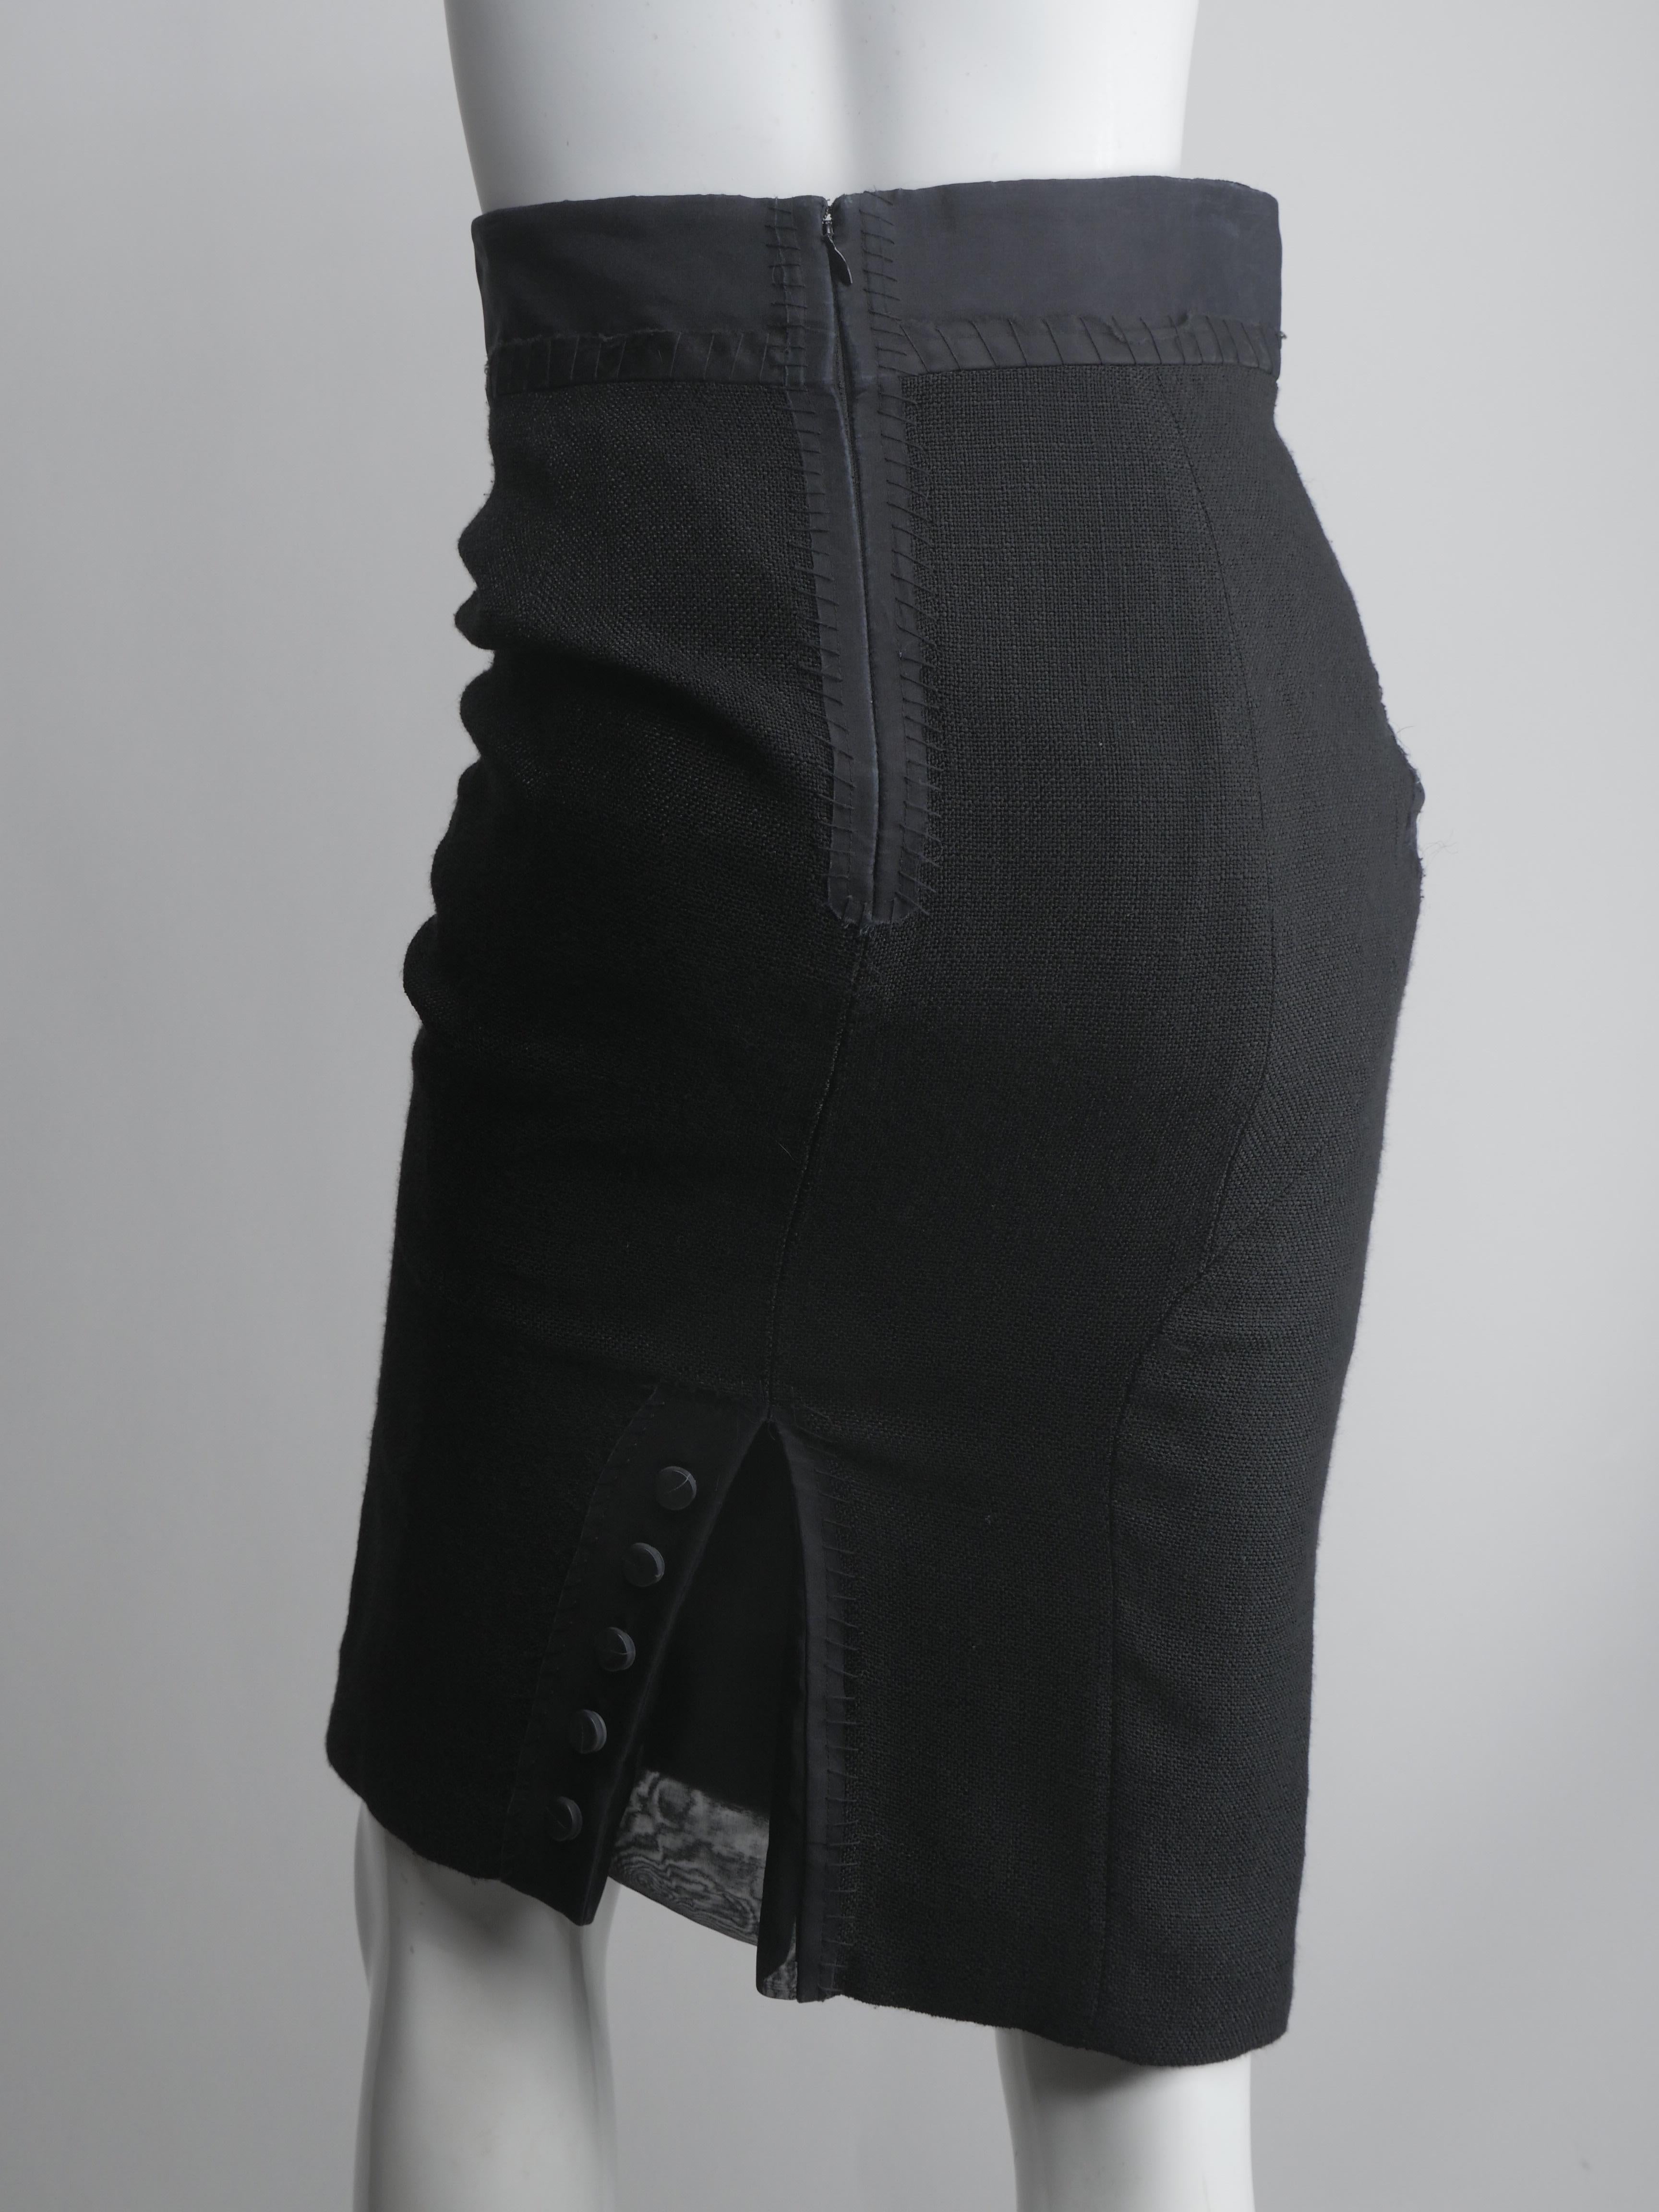 Zac Posen Size 6 Black Linen Pencil Skirt 1